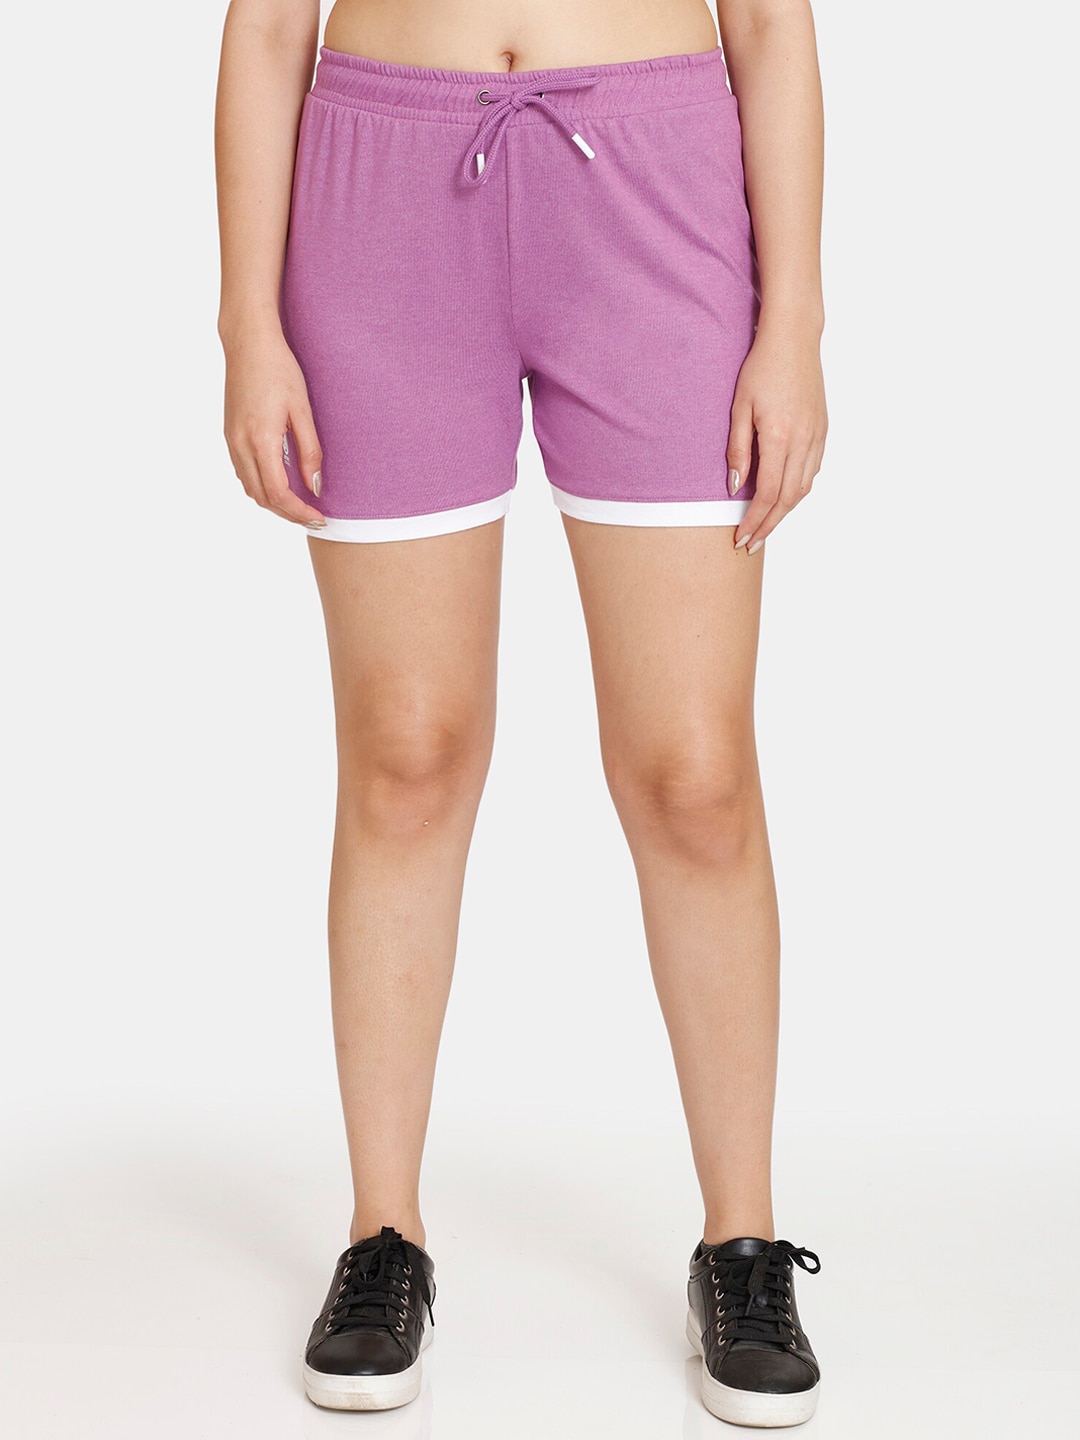 Rosaline by Zivame Women Purple Shorts Price in India